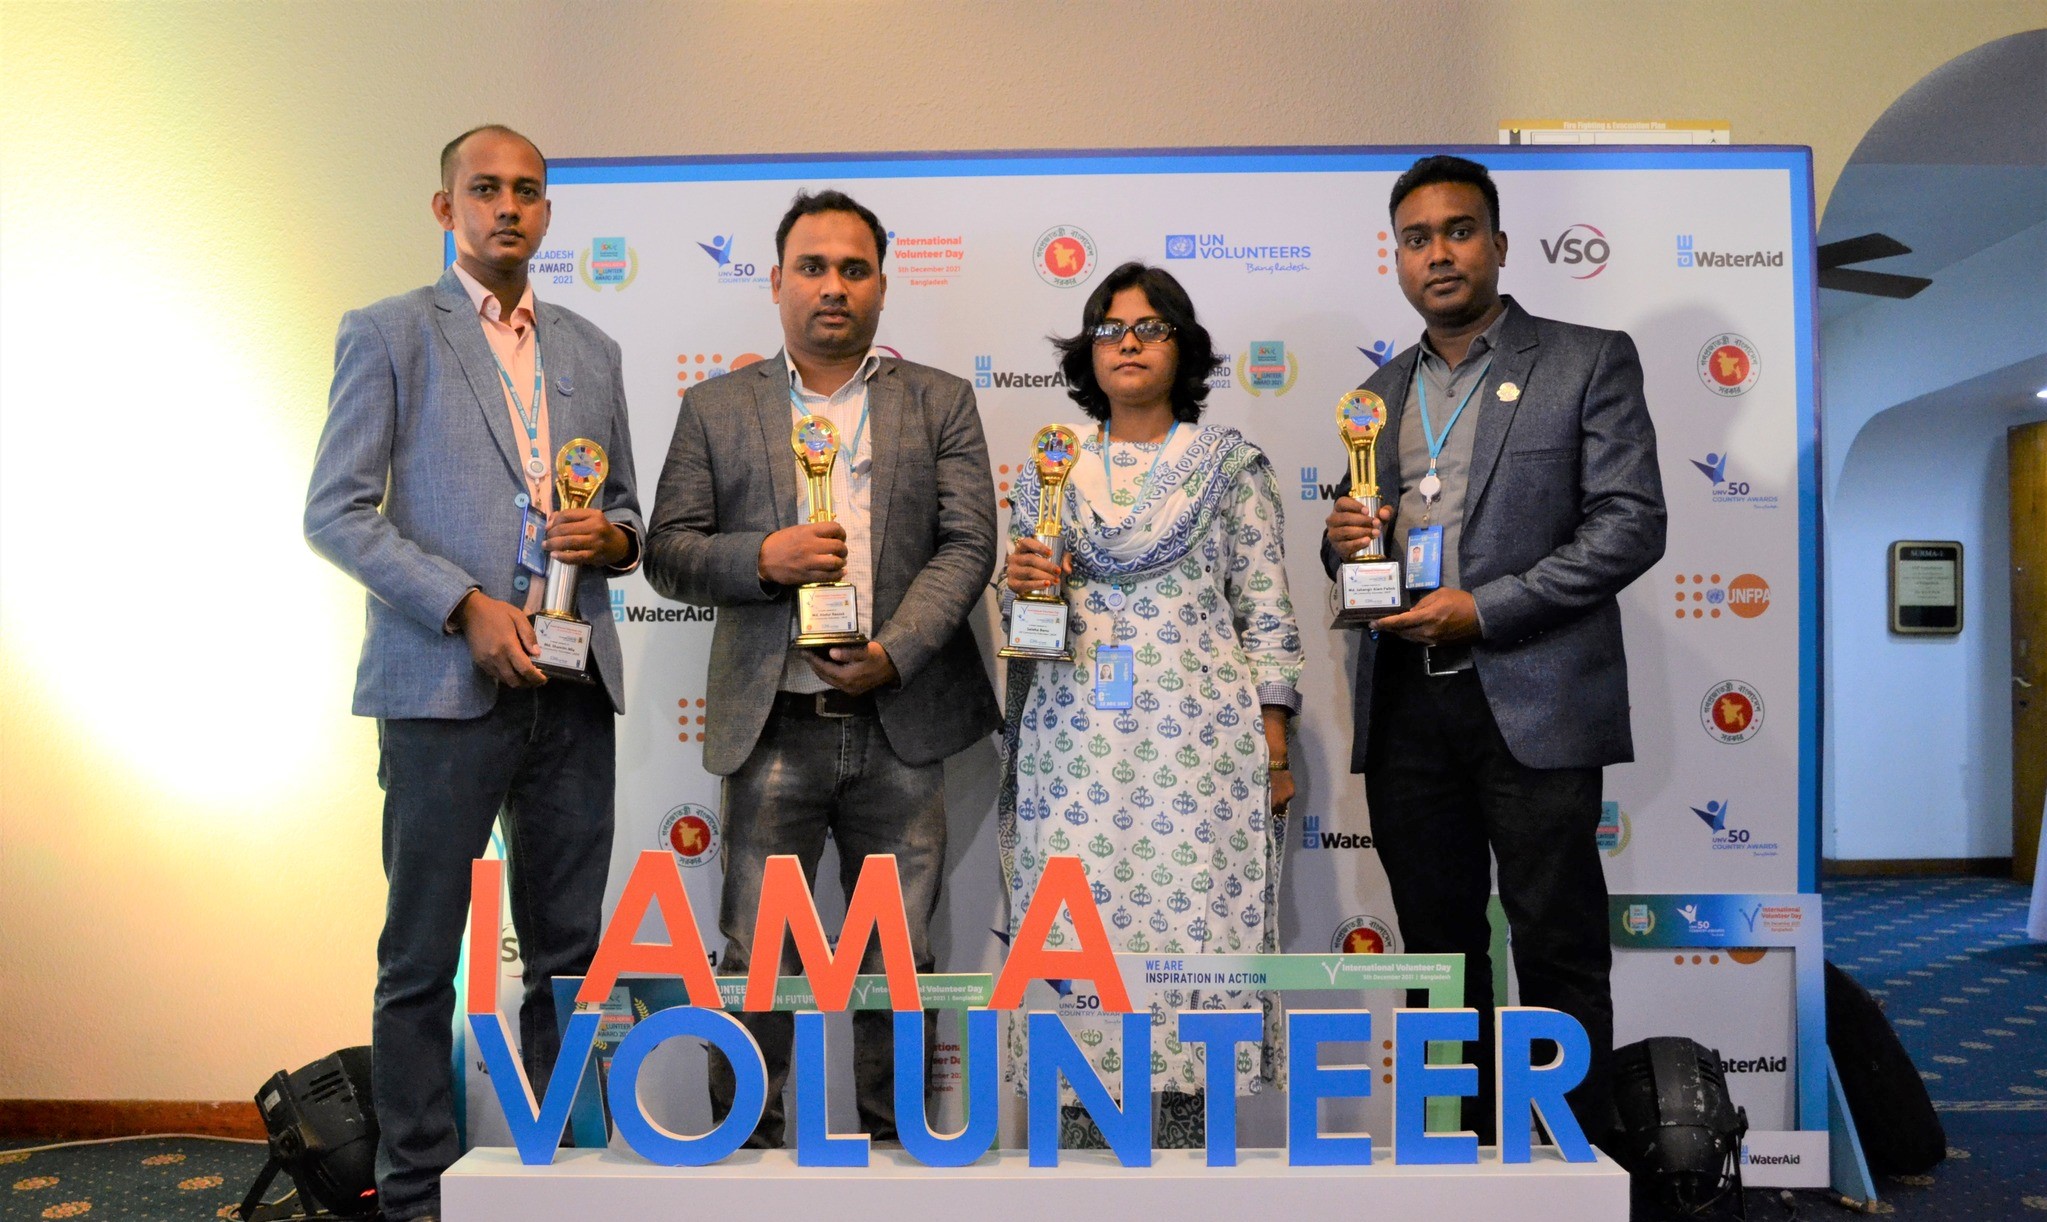 UNV50 volunteer award in Bangladesh